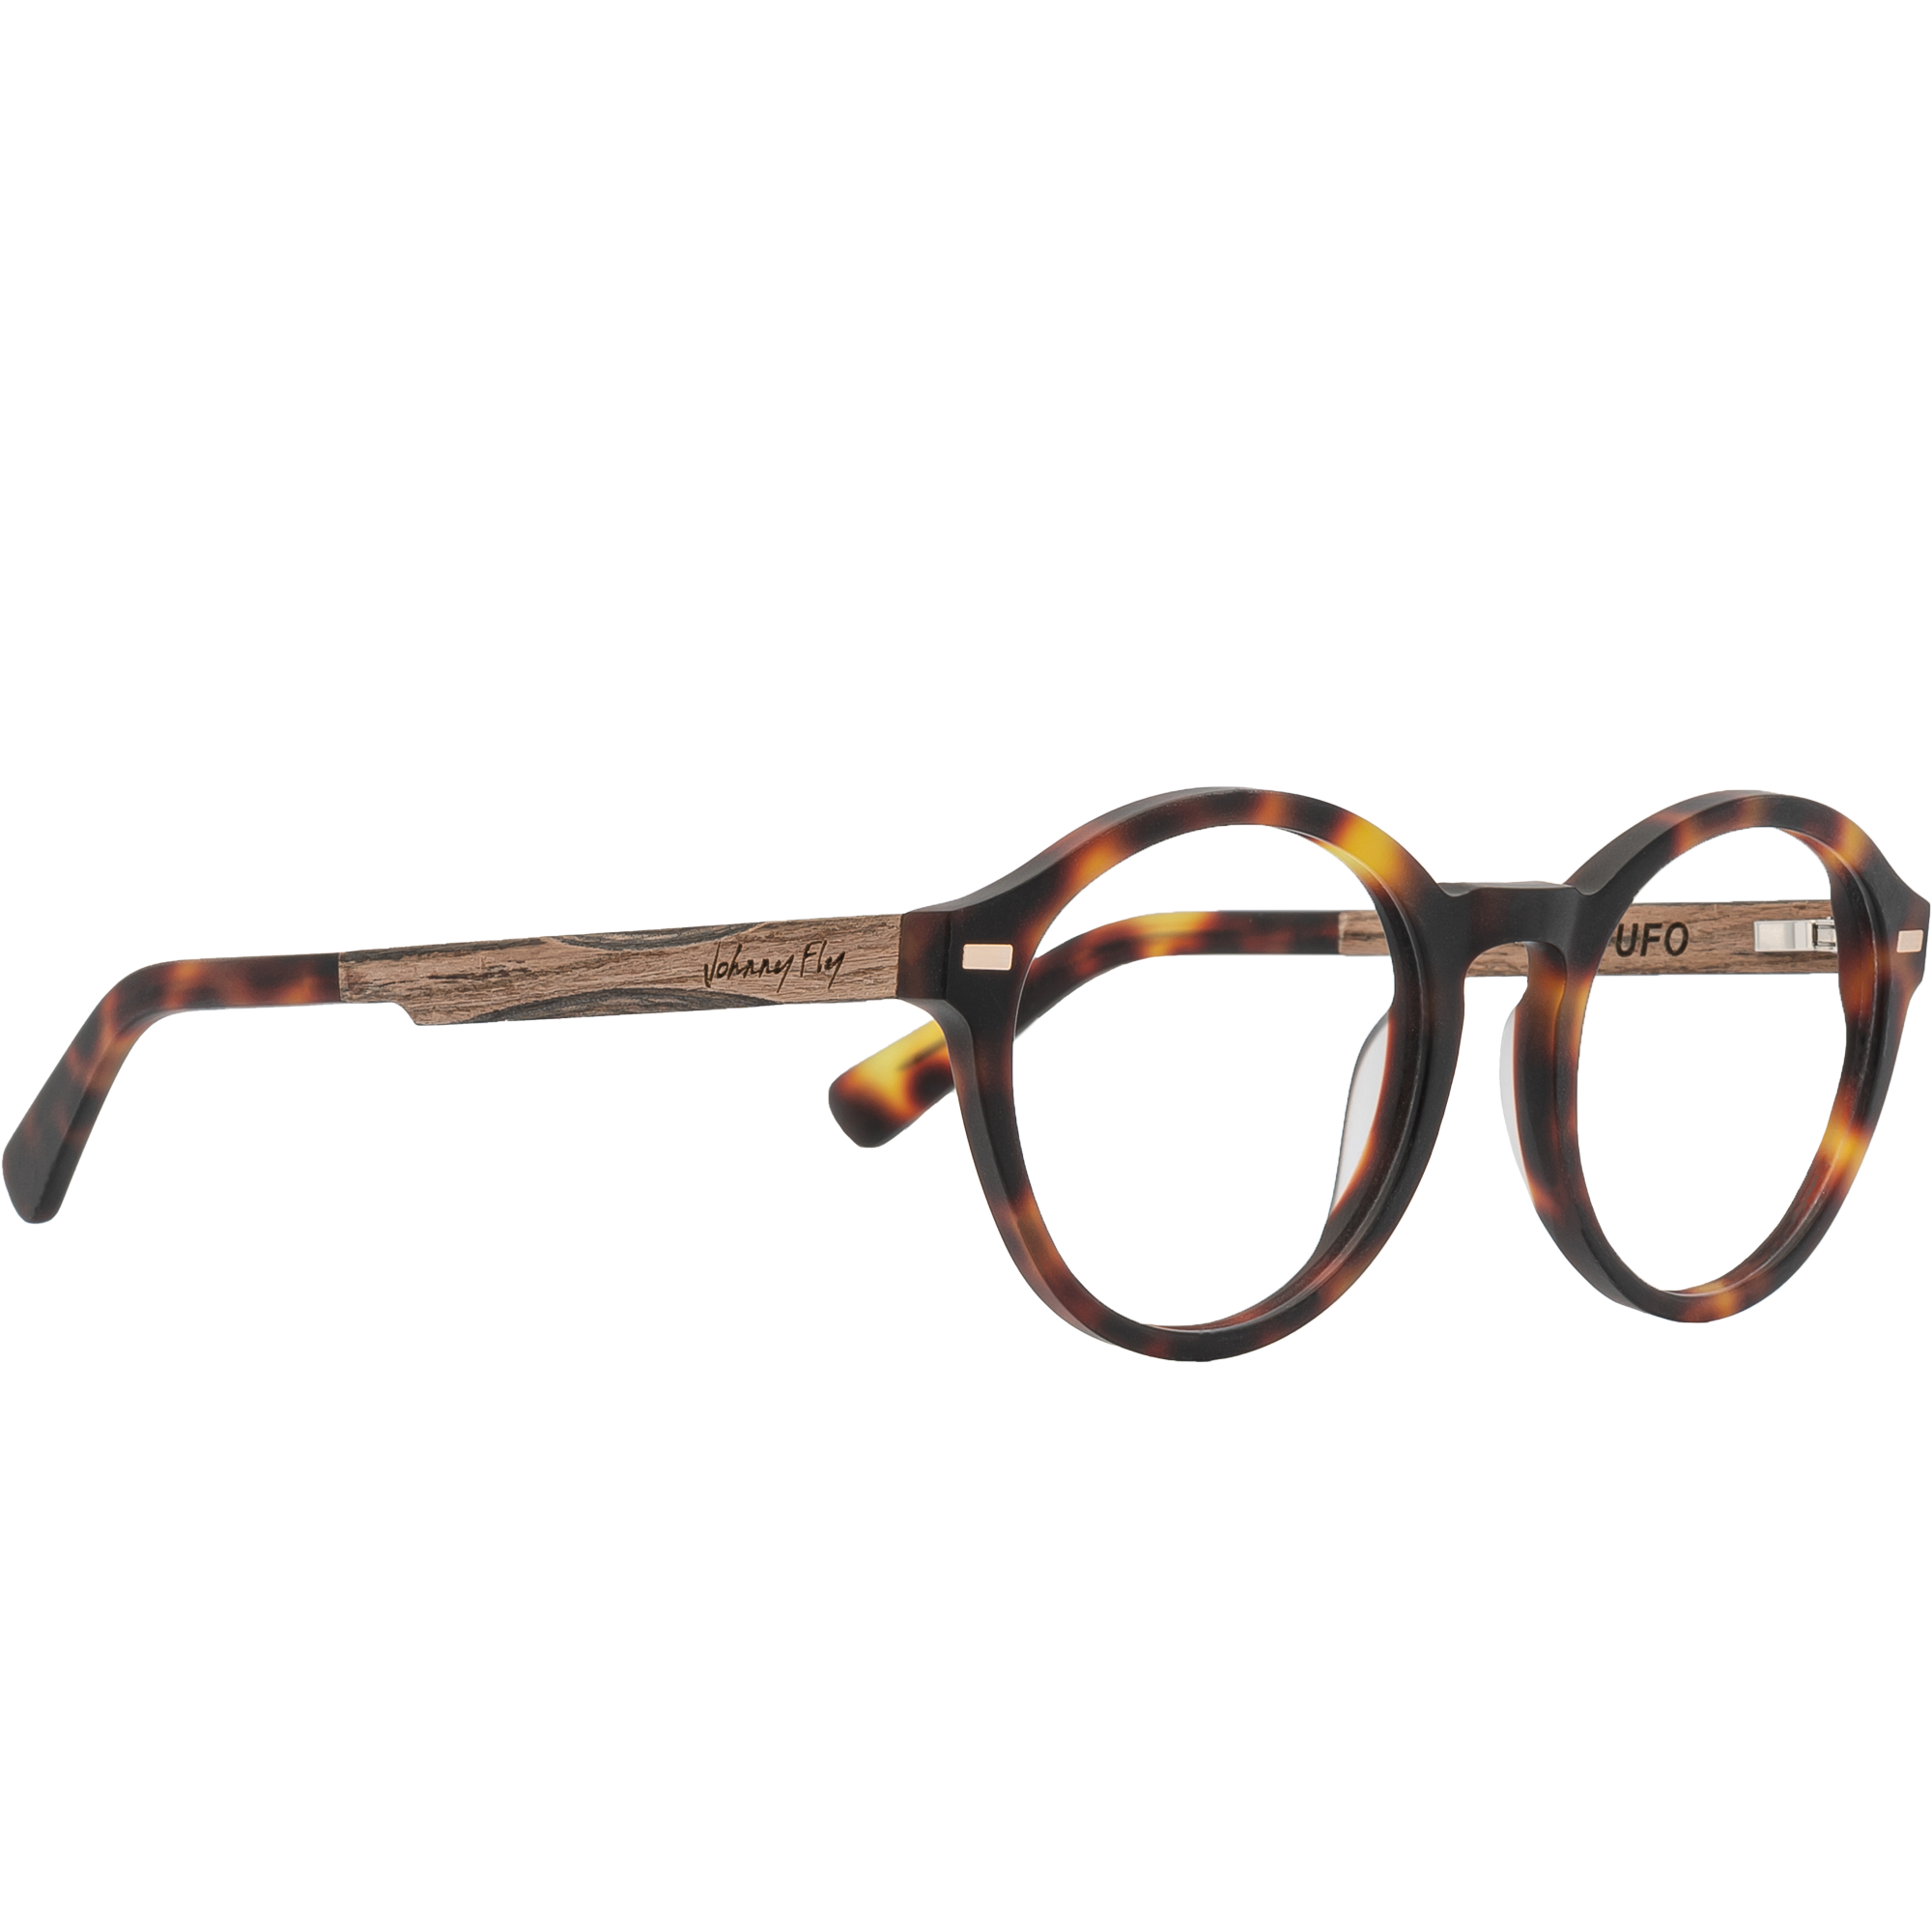 UFO Frame - Classic Tortoise - Eyeglasses Frame - Johnny Fly Eyewear #color_classic-tortoise